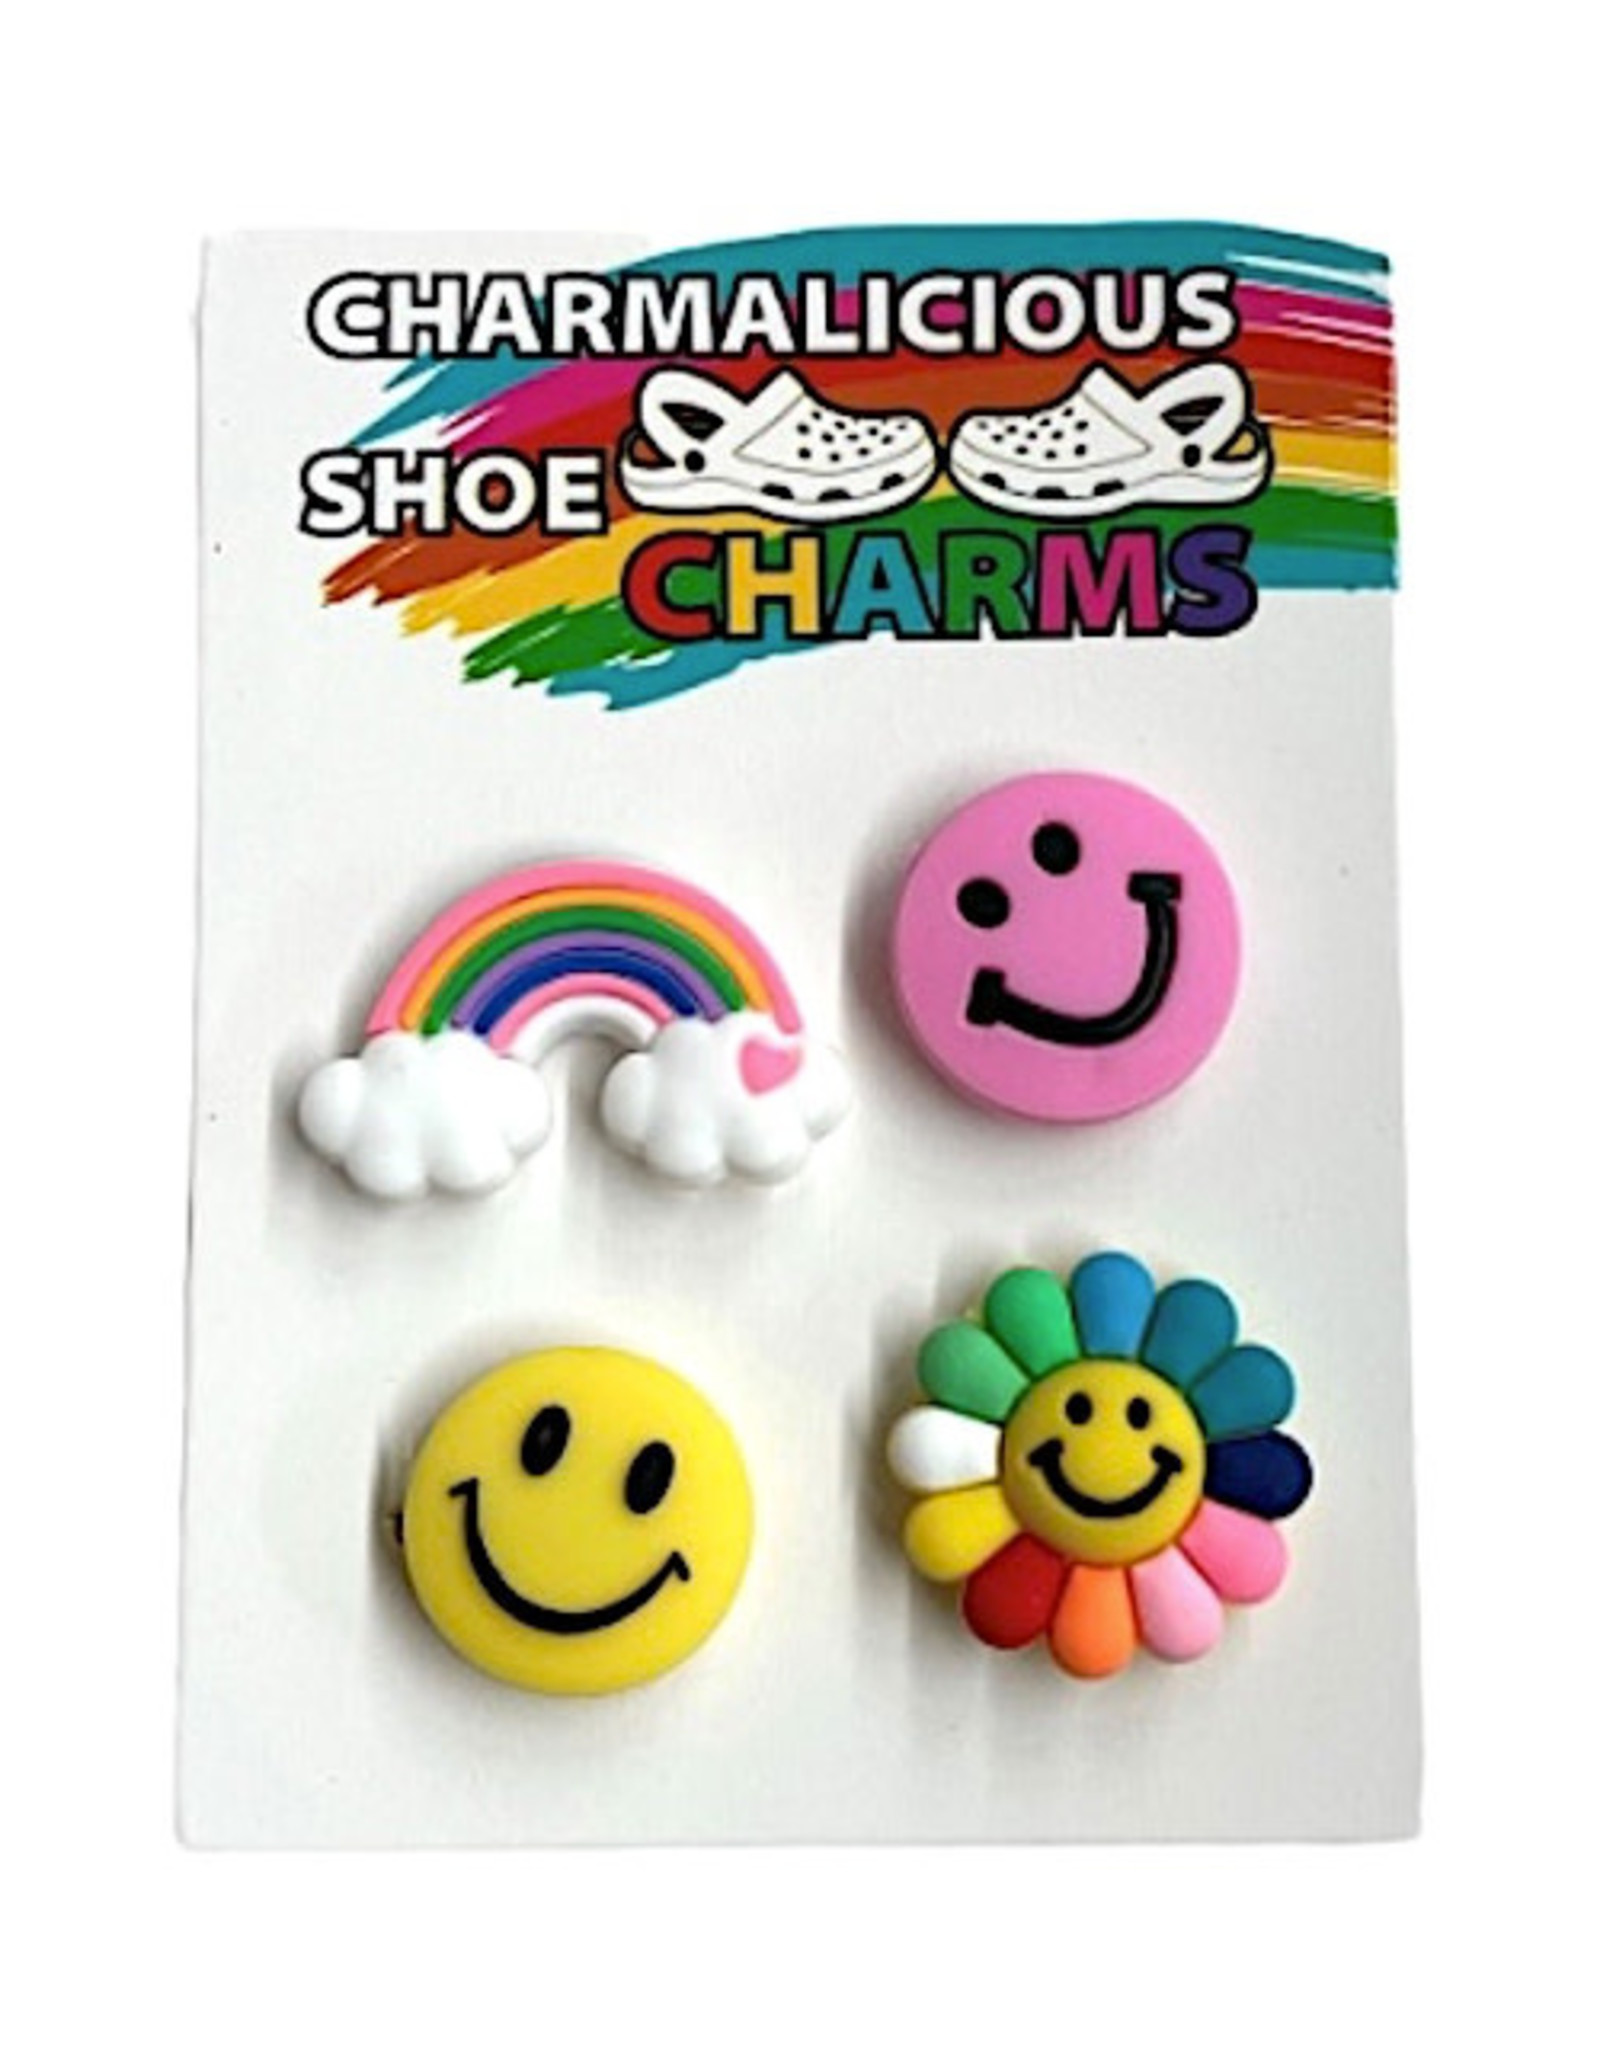 Charmalicious Shoe Charm